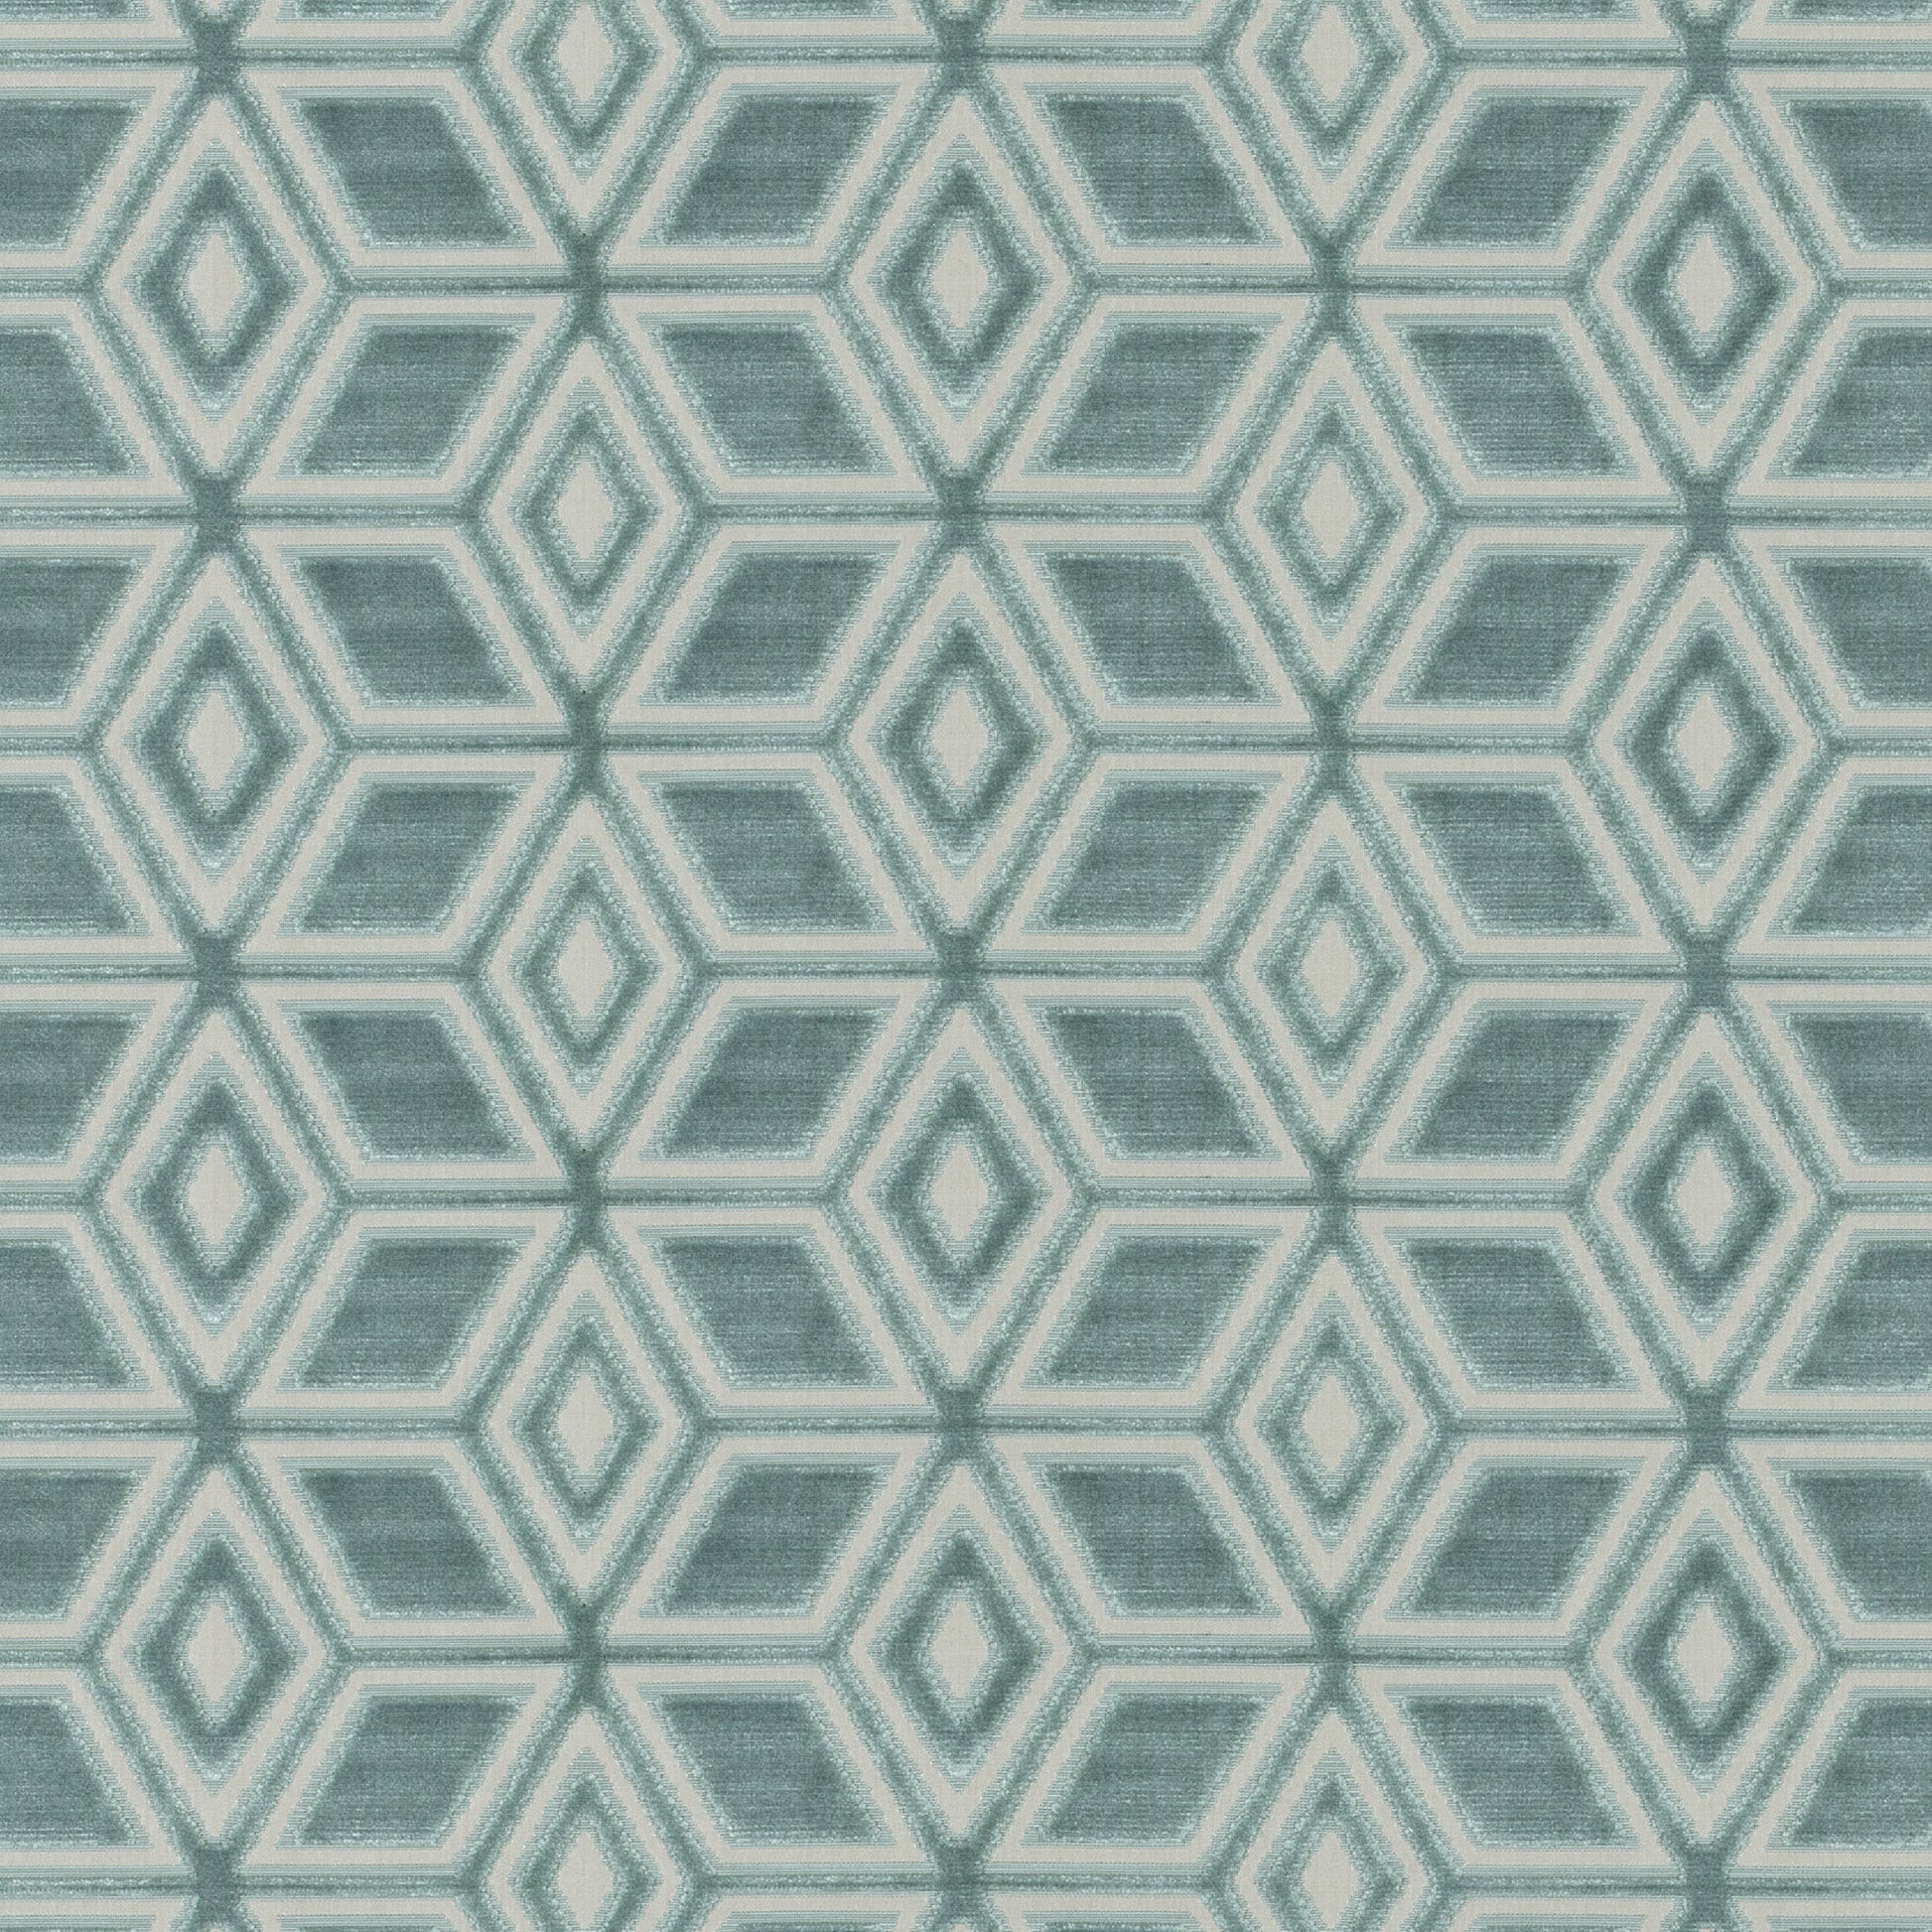 Purchase  Ann French Fabric Item# AW72983  pattern name  Jardin Maze Velvet